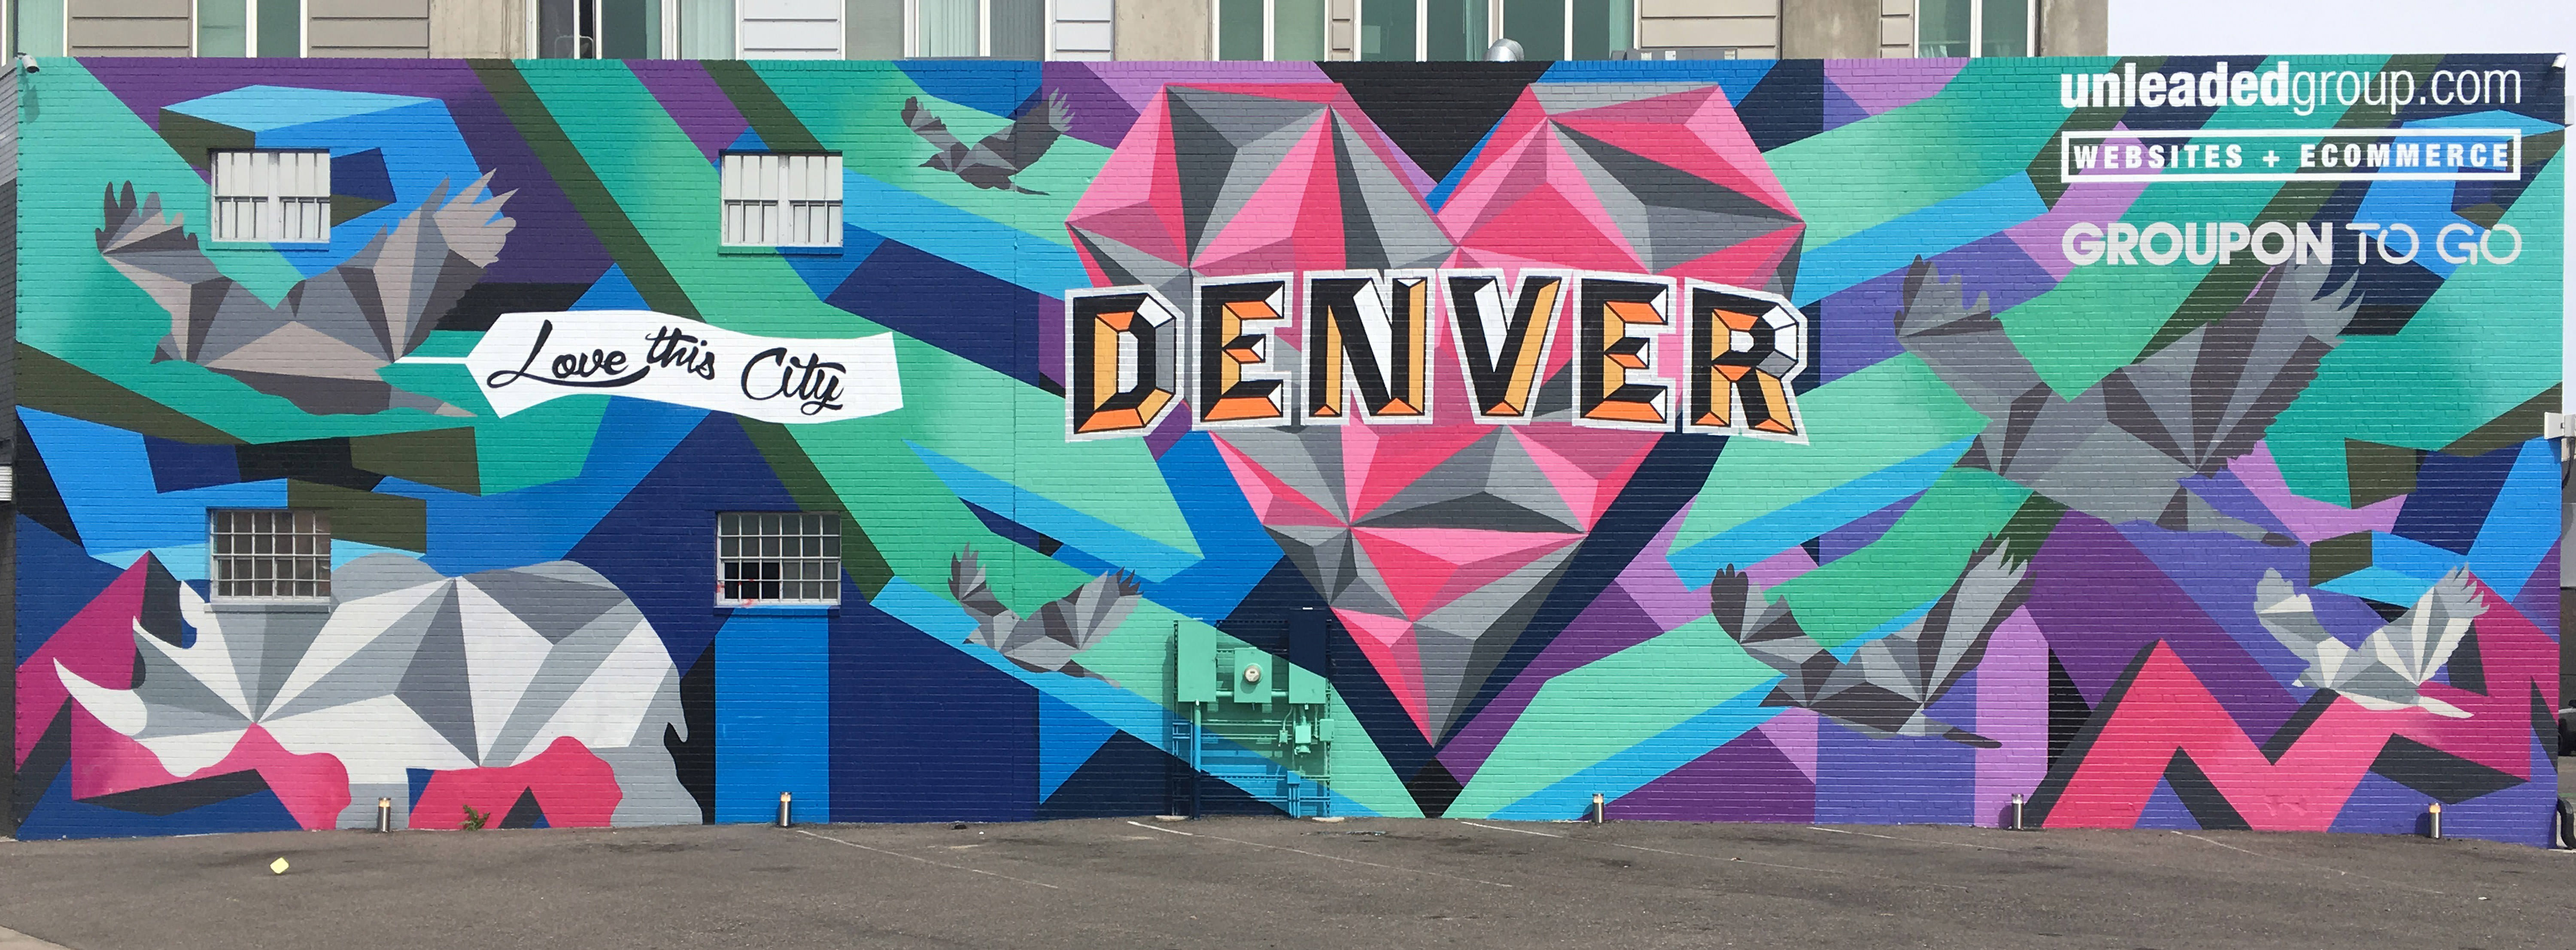 Denver Mural, Visit Denver, Love this City, Mural, Rino Arts District, Denver, Colorado, Jason T Graves, SoGnar Creative Division, 2016